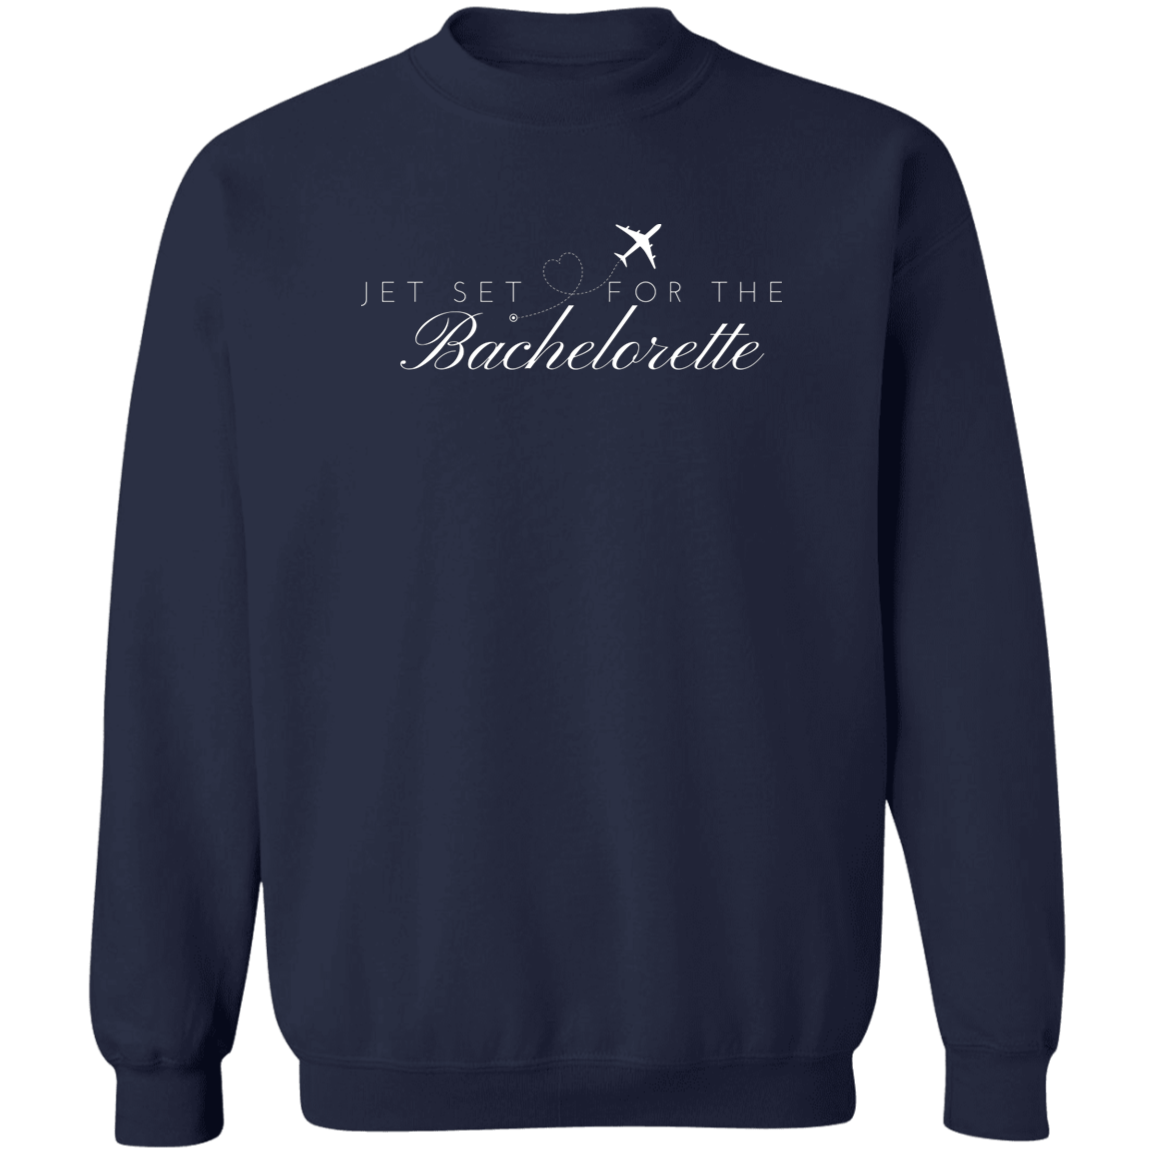 Bachelorette jet set black G180 Crewneck Pullover Sweatshirt